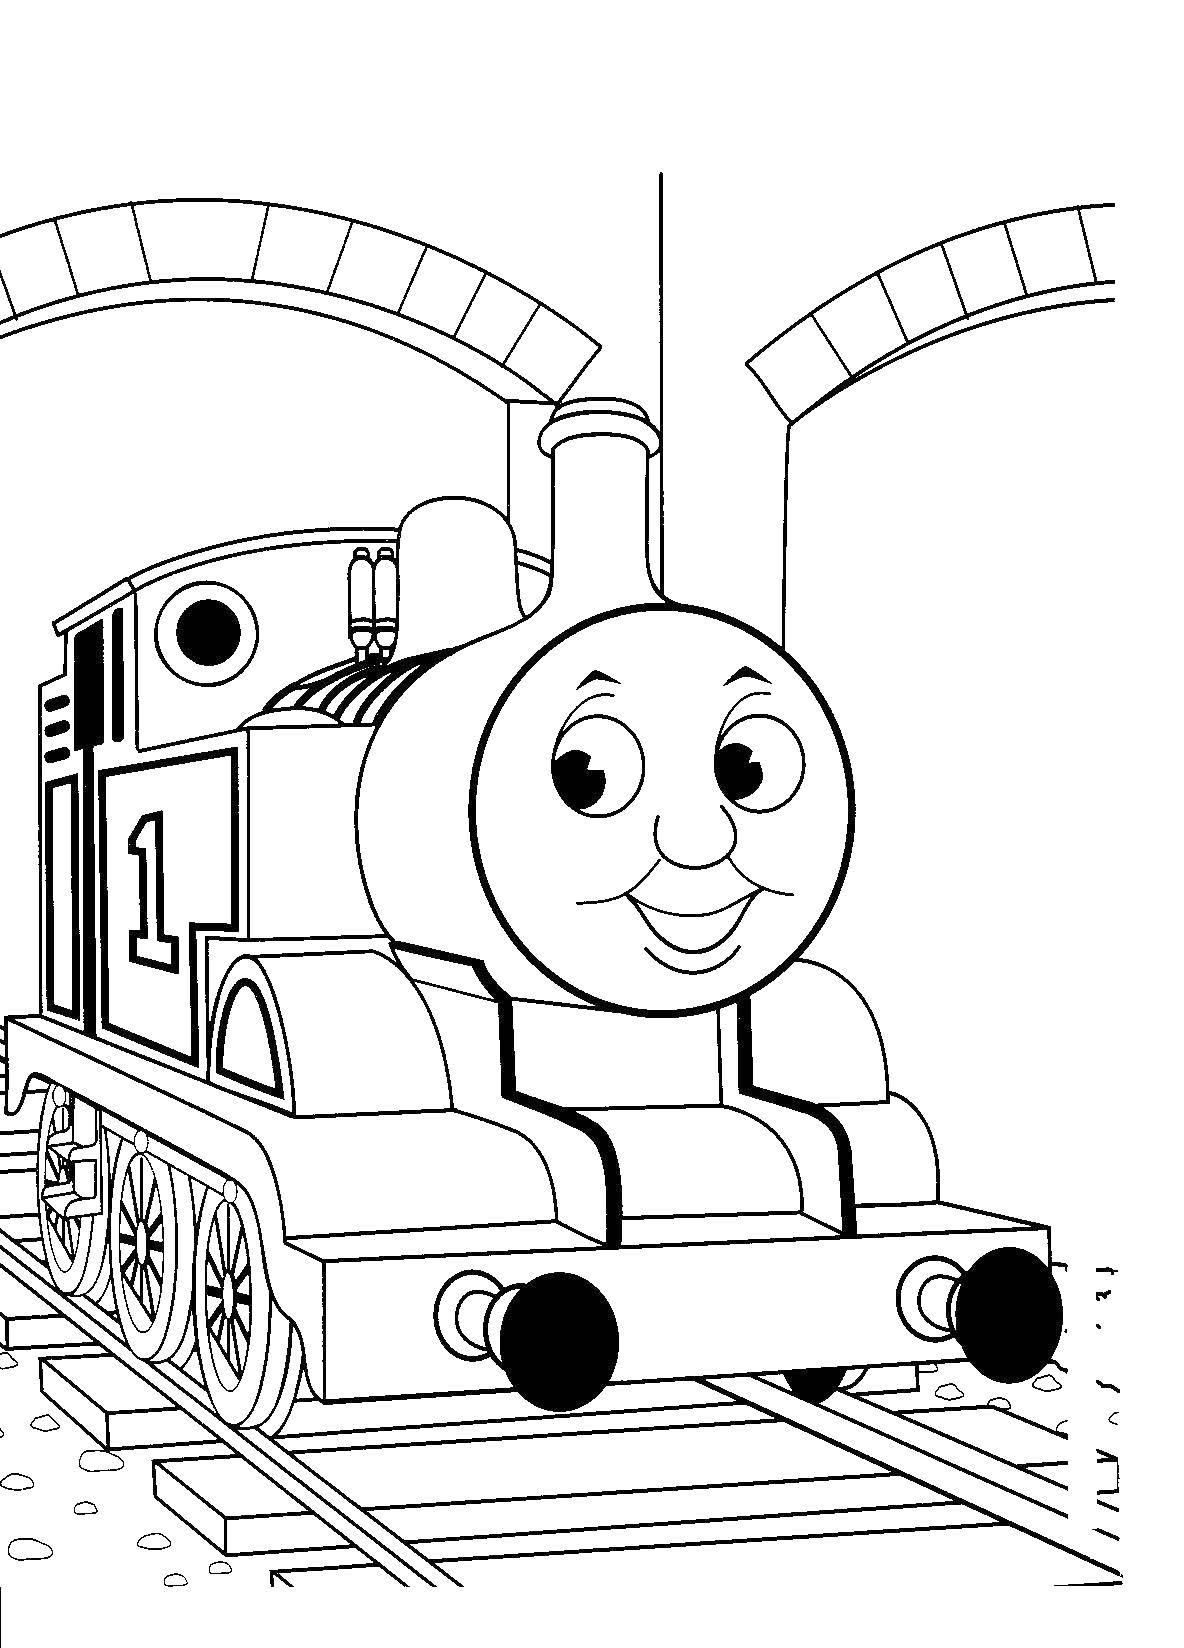 Coloring Thomas the tank engine. Category train. Tags:  Thomas, train.